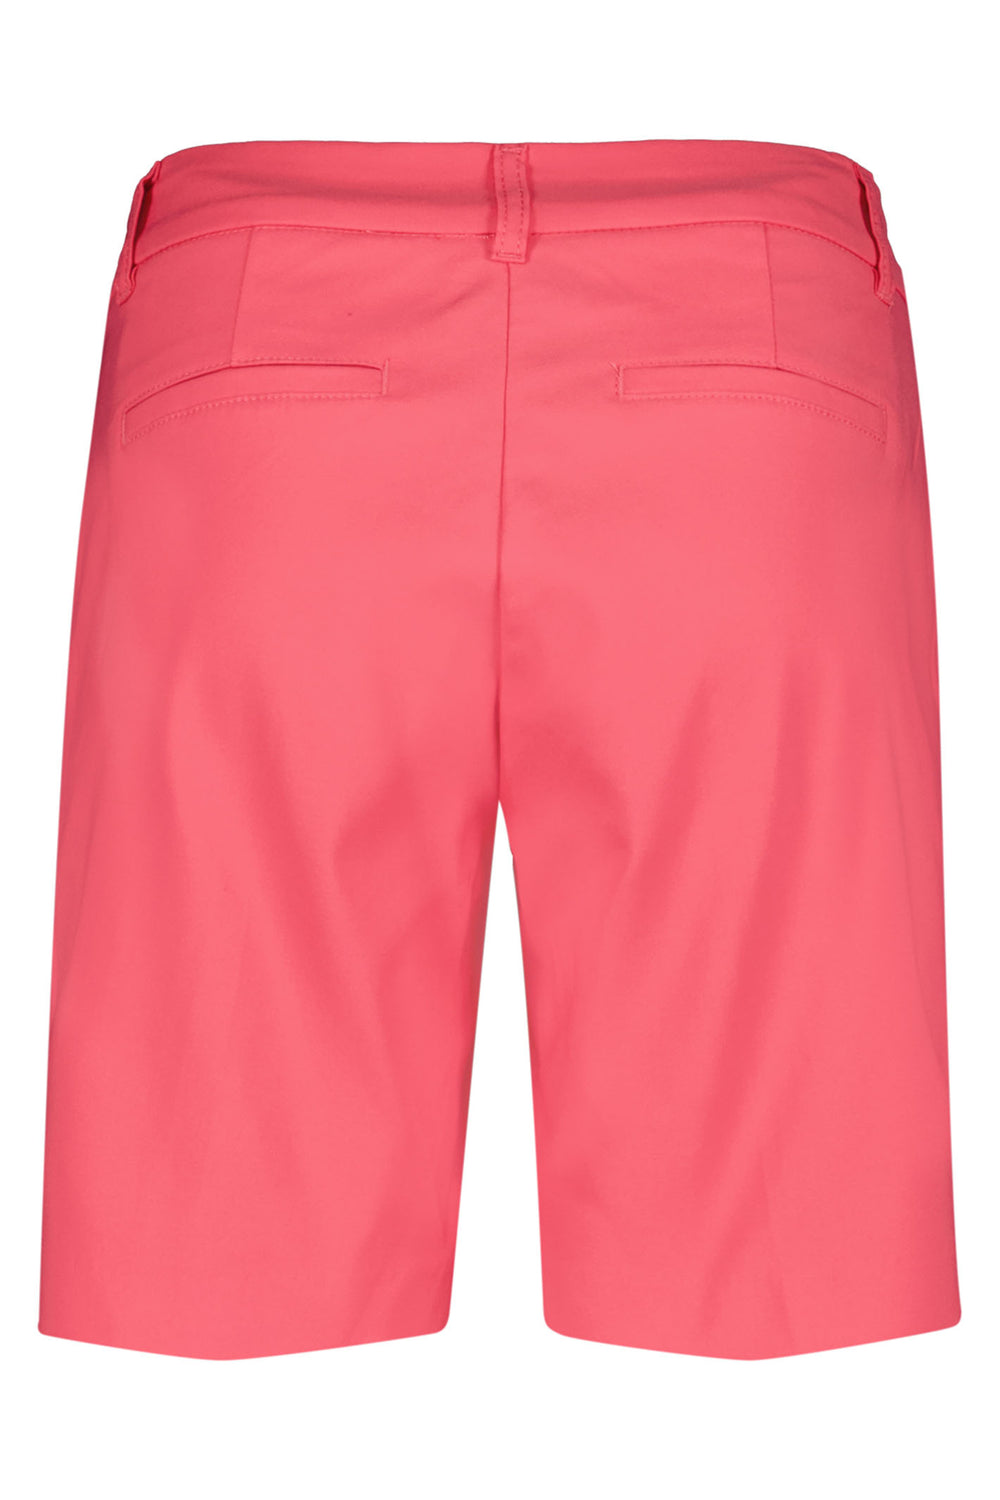 Red Button SRB4176 Ava Coral Smart Shorts 21cm - Olivia Grace Fashion